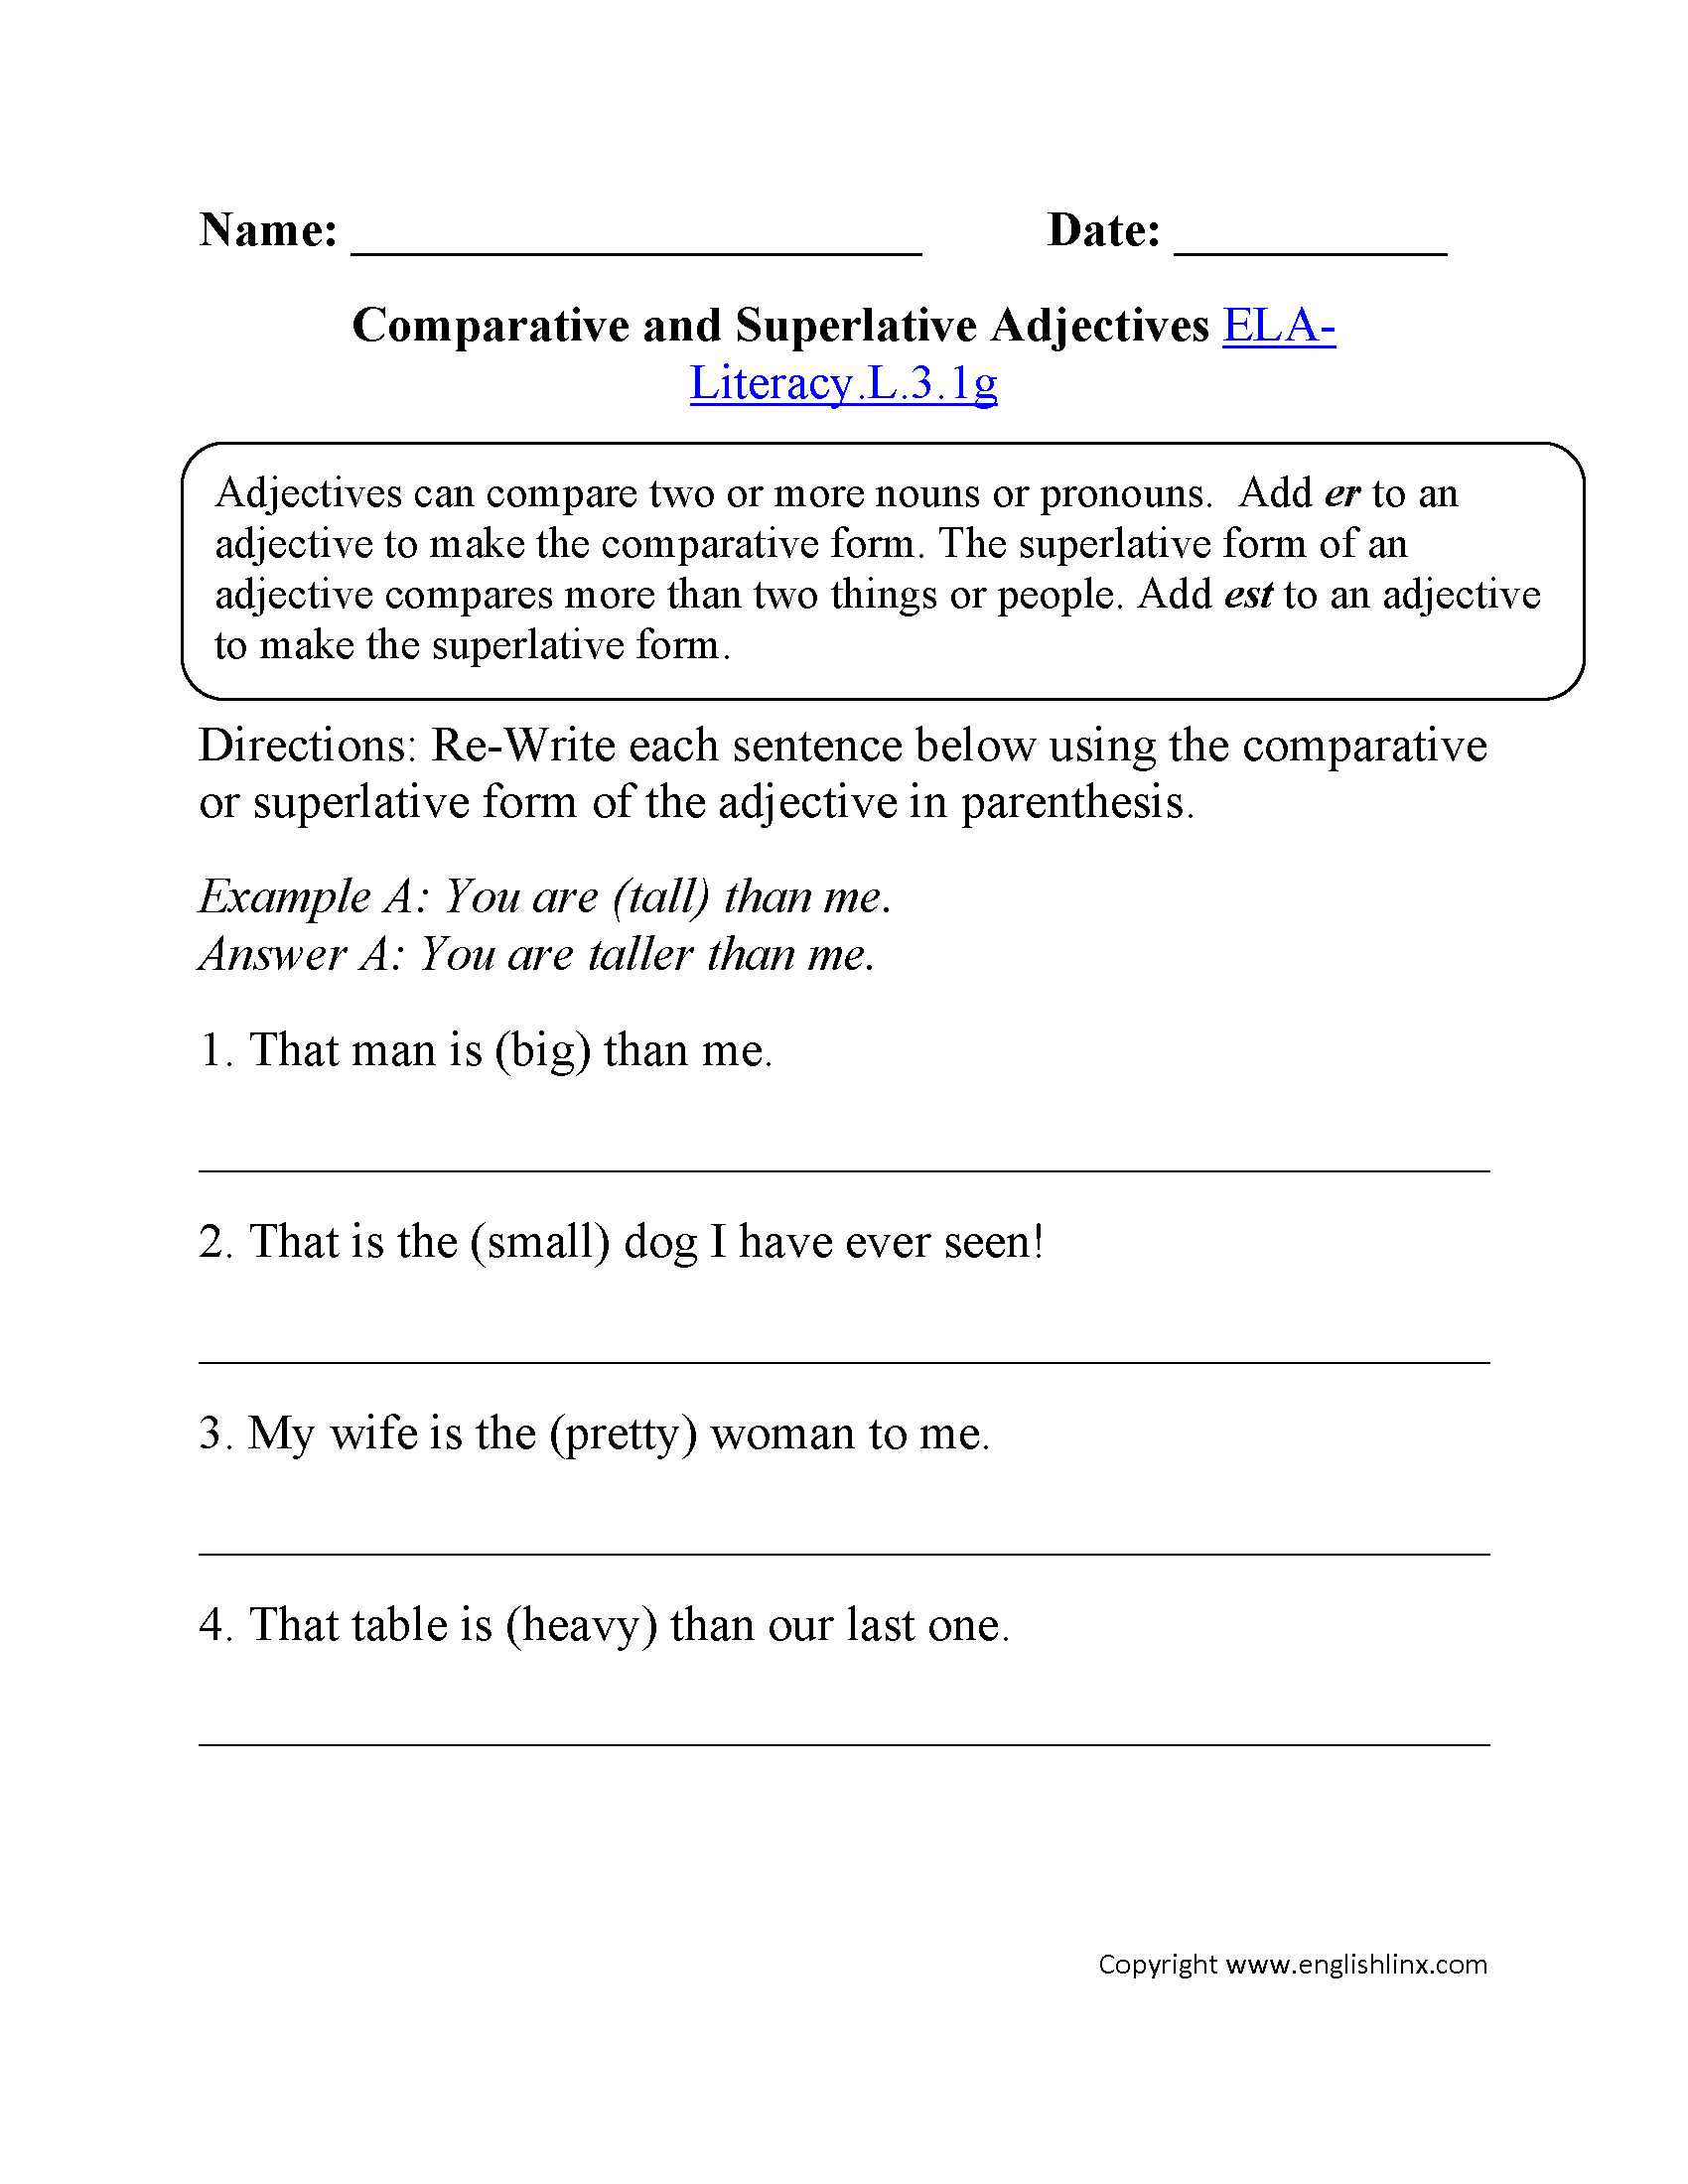 Comparative and Superlative Adjectives Worksheet 2 ELA-Literacy.L.3.1g Language Worksheet